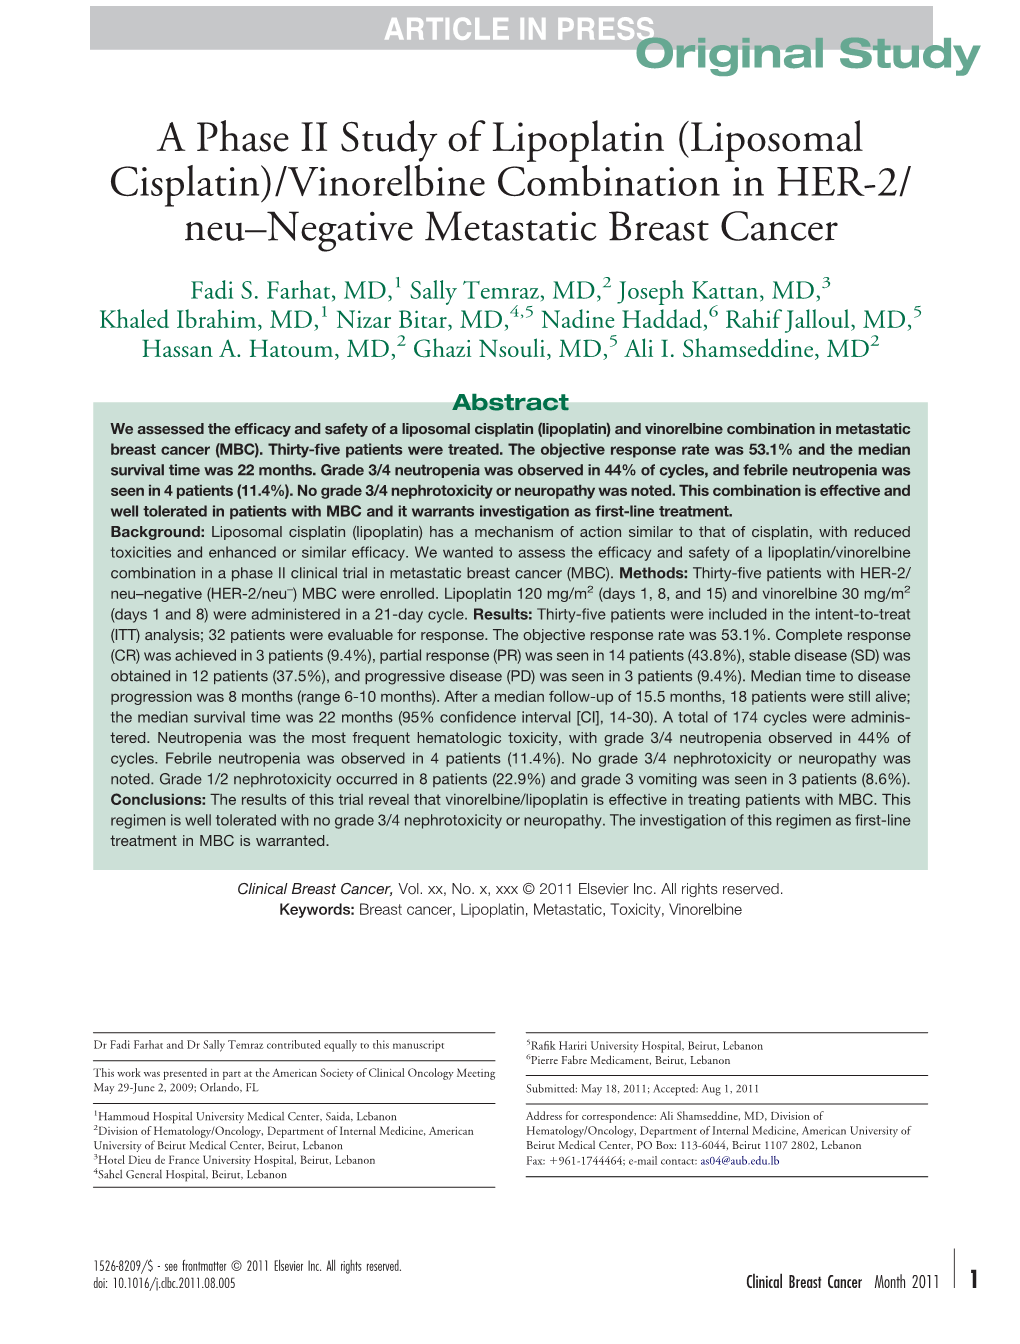 A Phase II Study of Lipoplatin (Liposomal Cisplatin)/Vinorelbine Combination in HER-2/ Neu–Negative Metastatic Breast Cancer